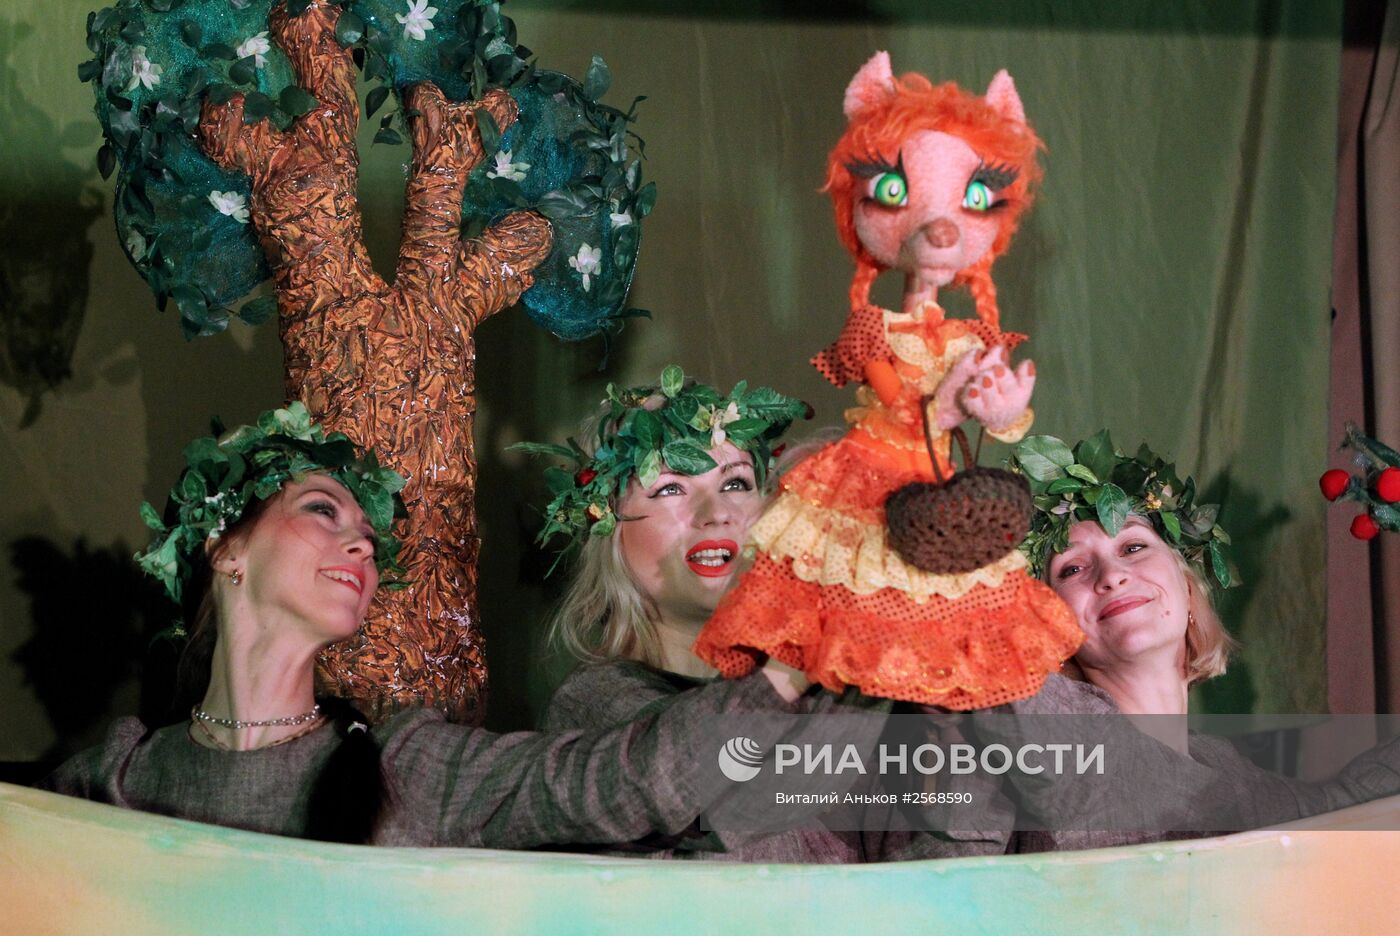 Приморский краевой театр кукол во Владивостоке